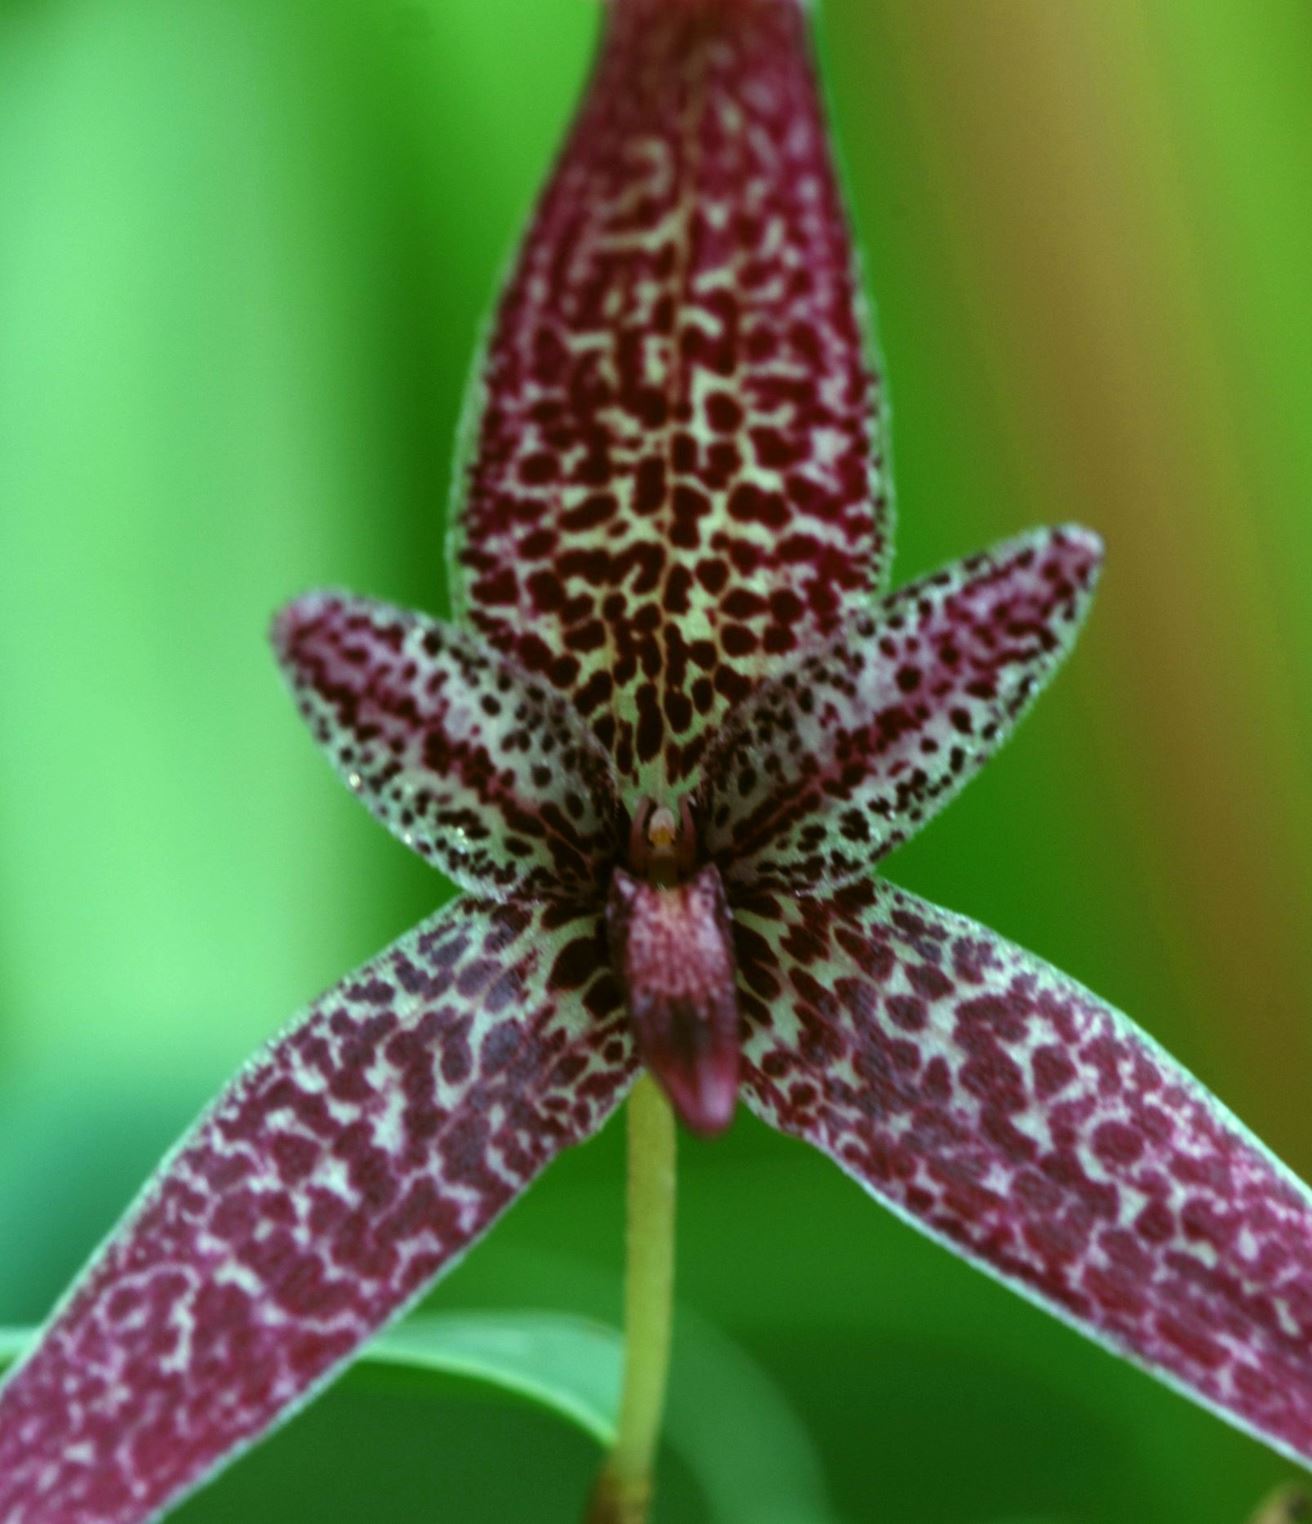 Bulbophyllum woelfliae